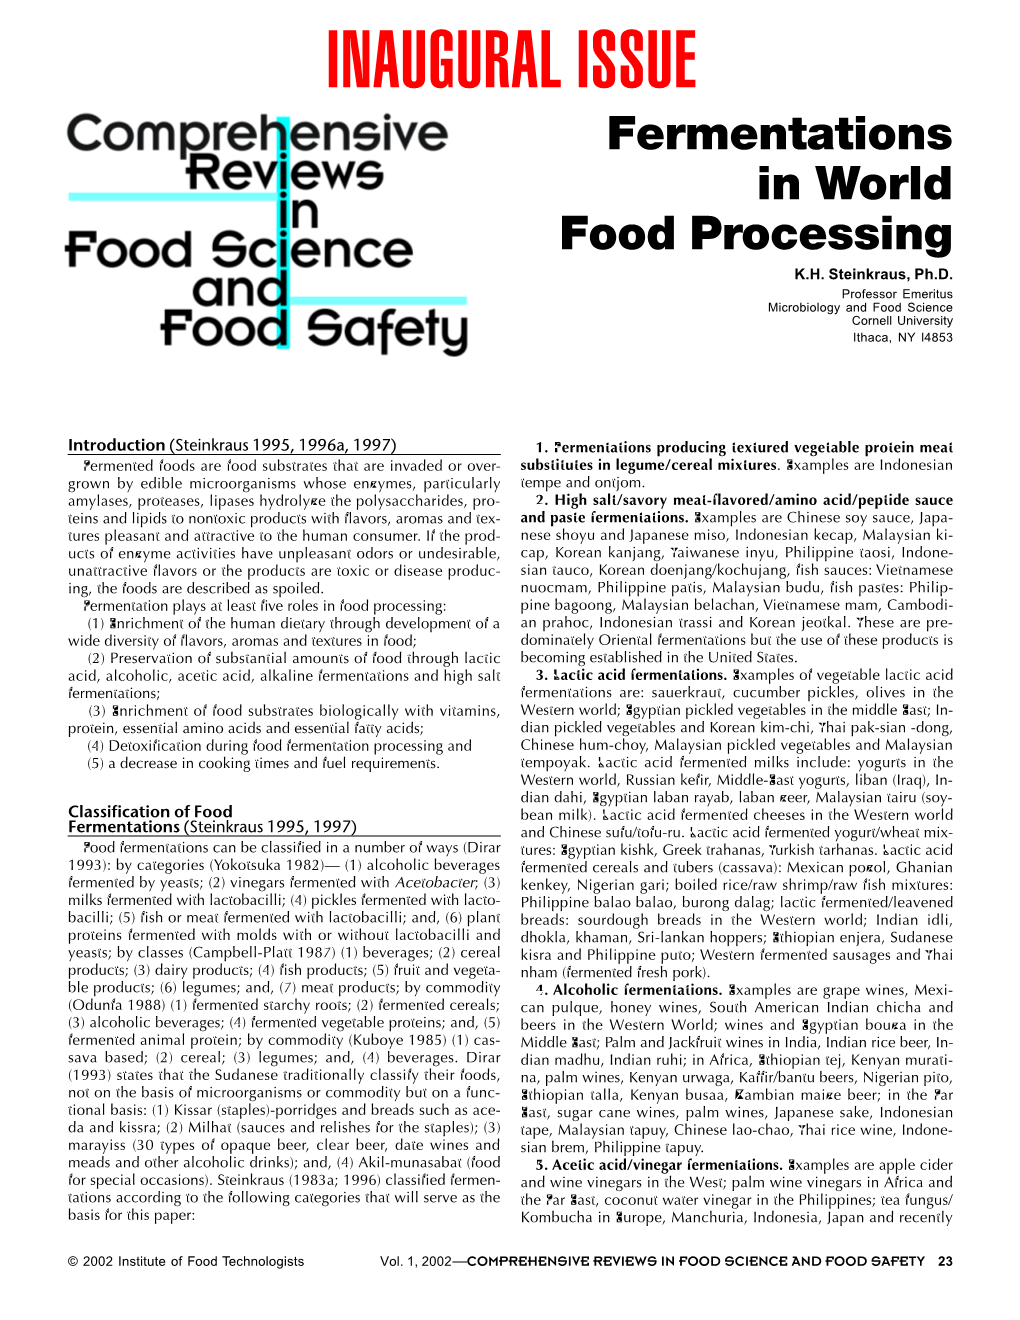 Fermentations in World Food Processing K.H